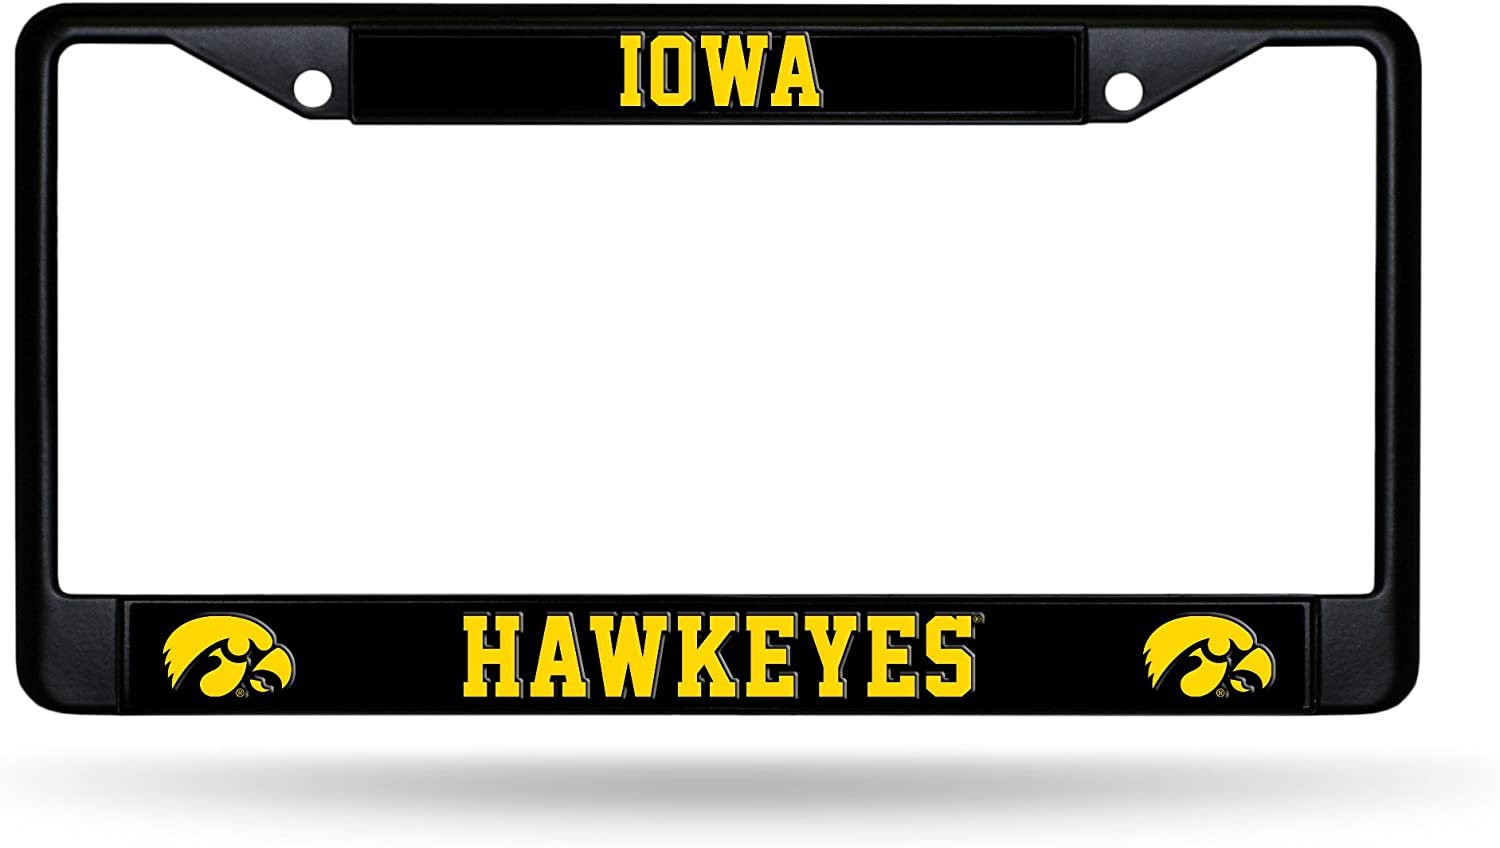 University of Iowa Hawkeyes Black Metal License Plate Frame Chrome Tag Cover 6x12 Inch